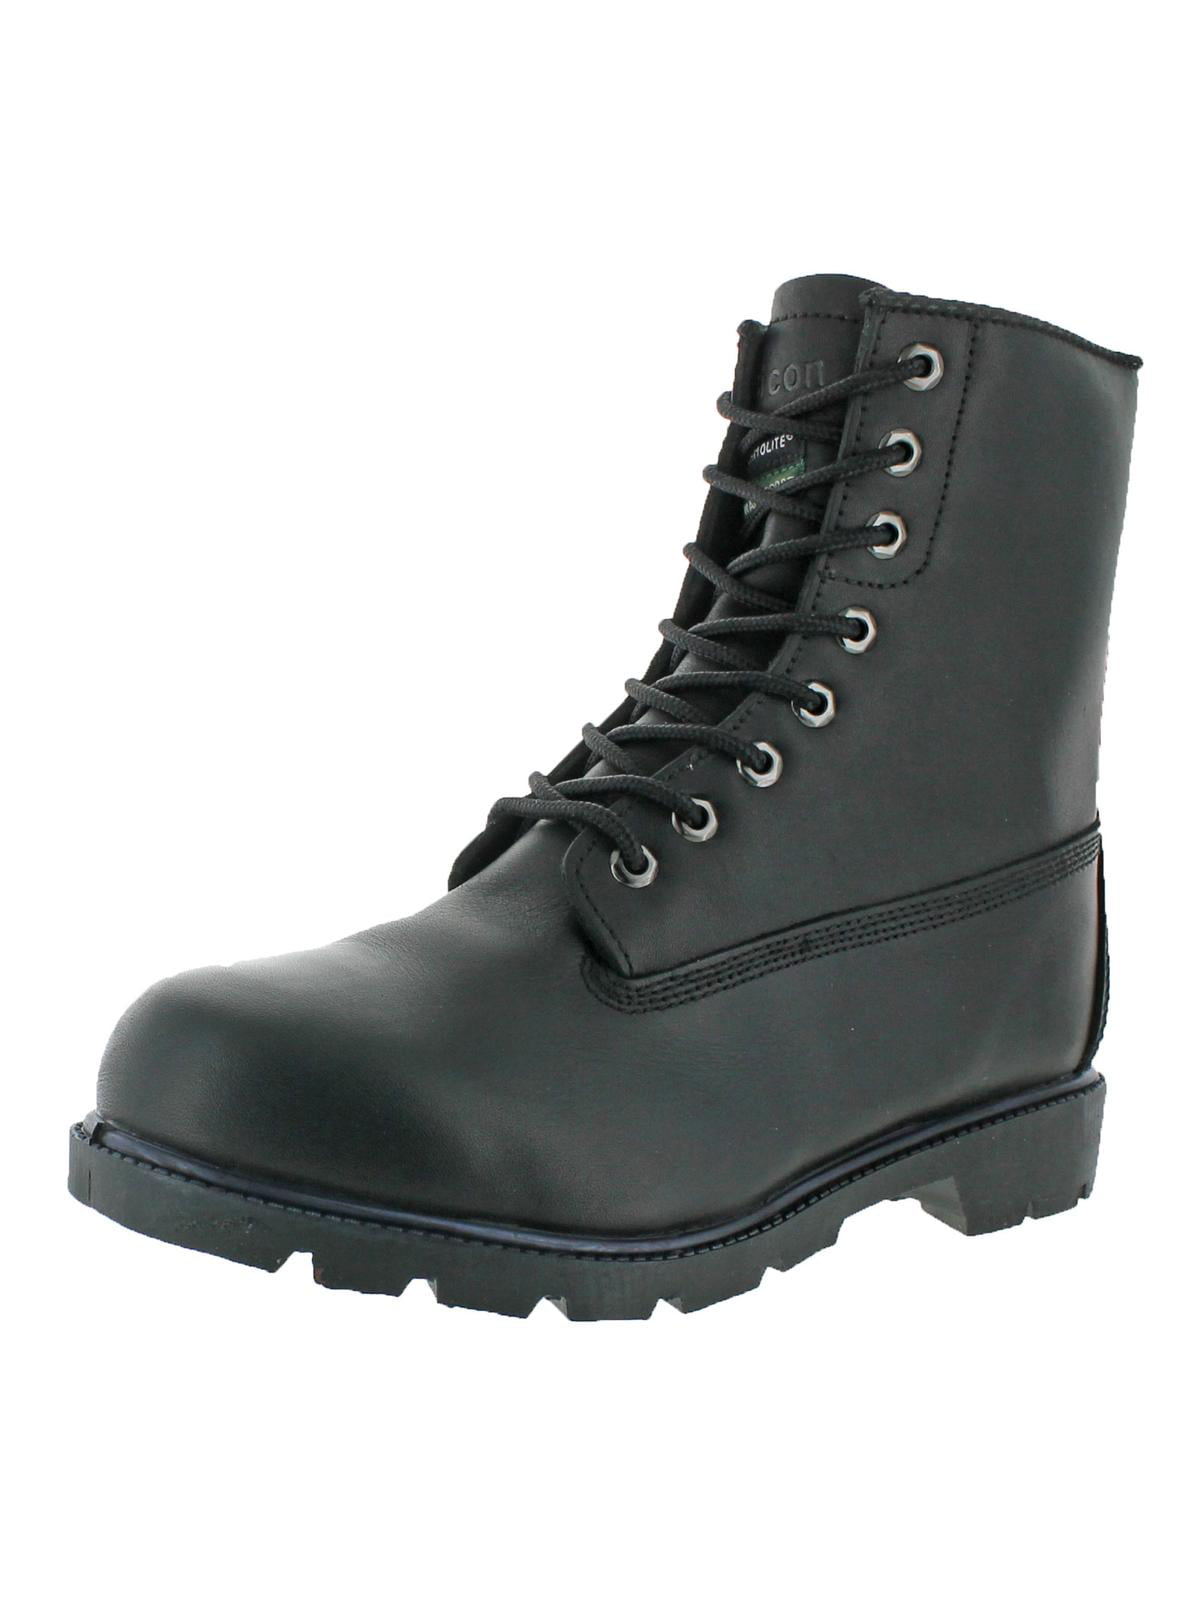 Rubicon - Rubicon Mens Leather Waterproof Work Boots - Walmart.com ...